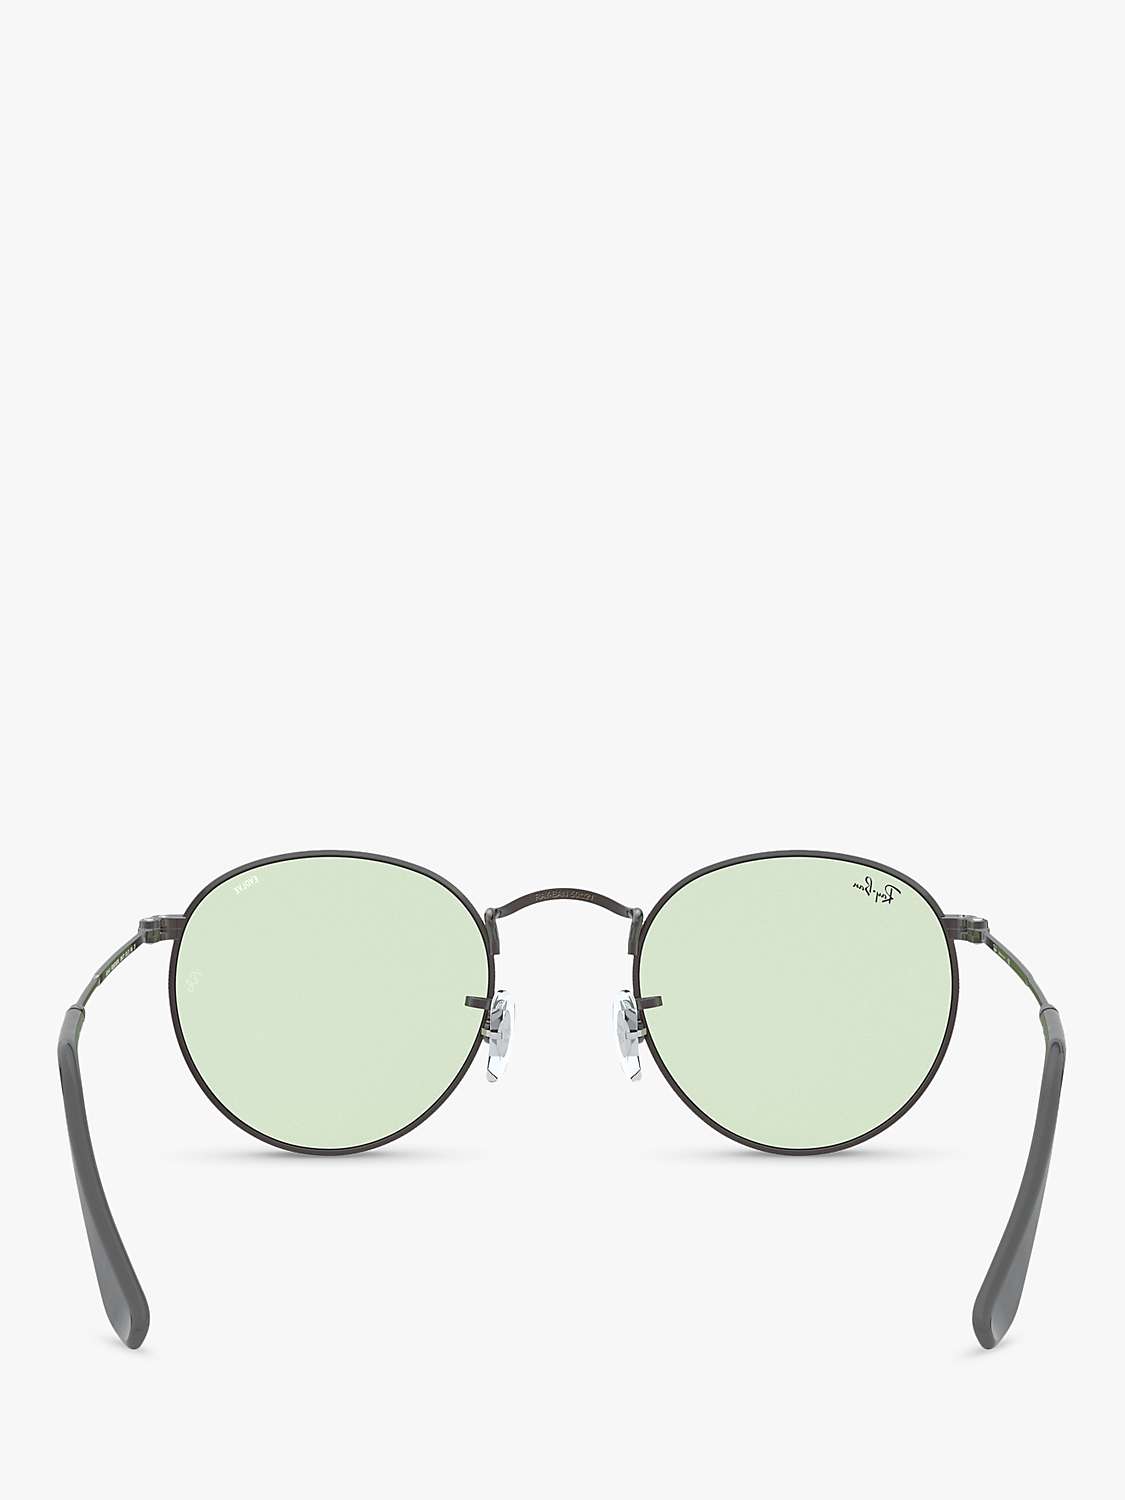 Buy Ray-Ban RB3447 Men's Round Sunglasses, Gunmetal/Light Green Online at johnlewis.com